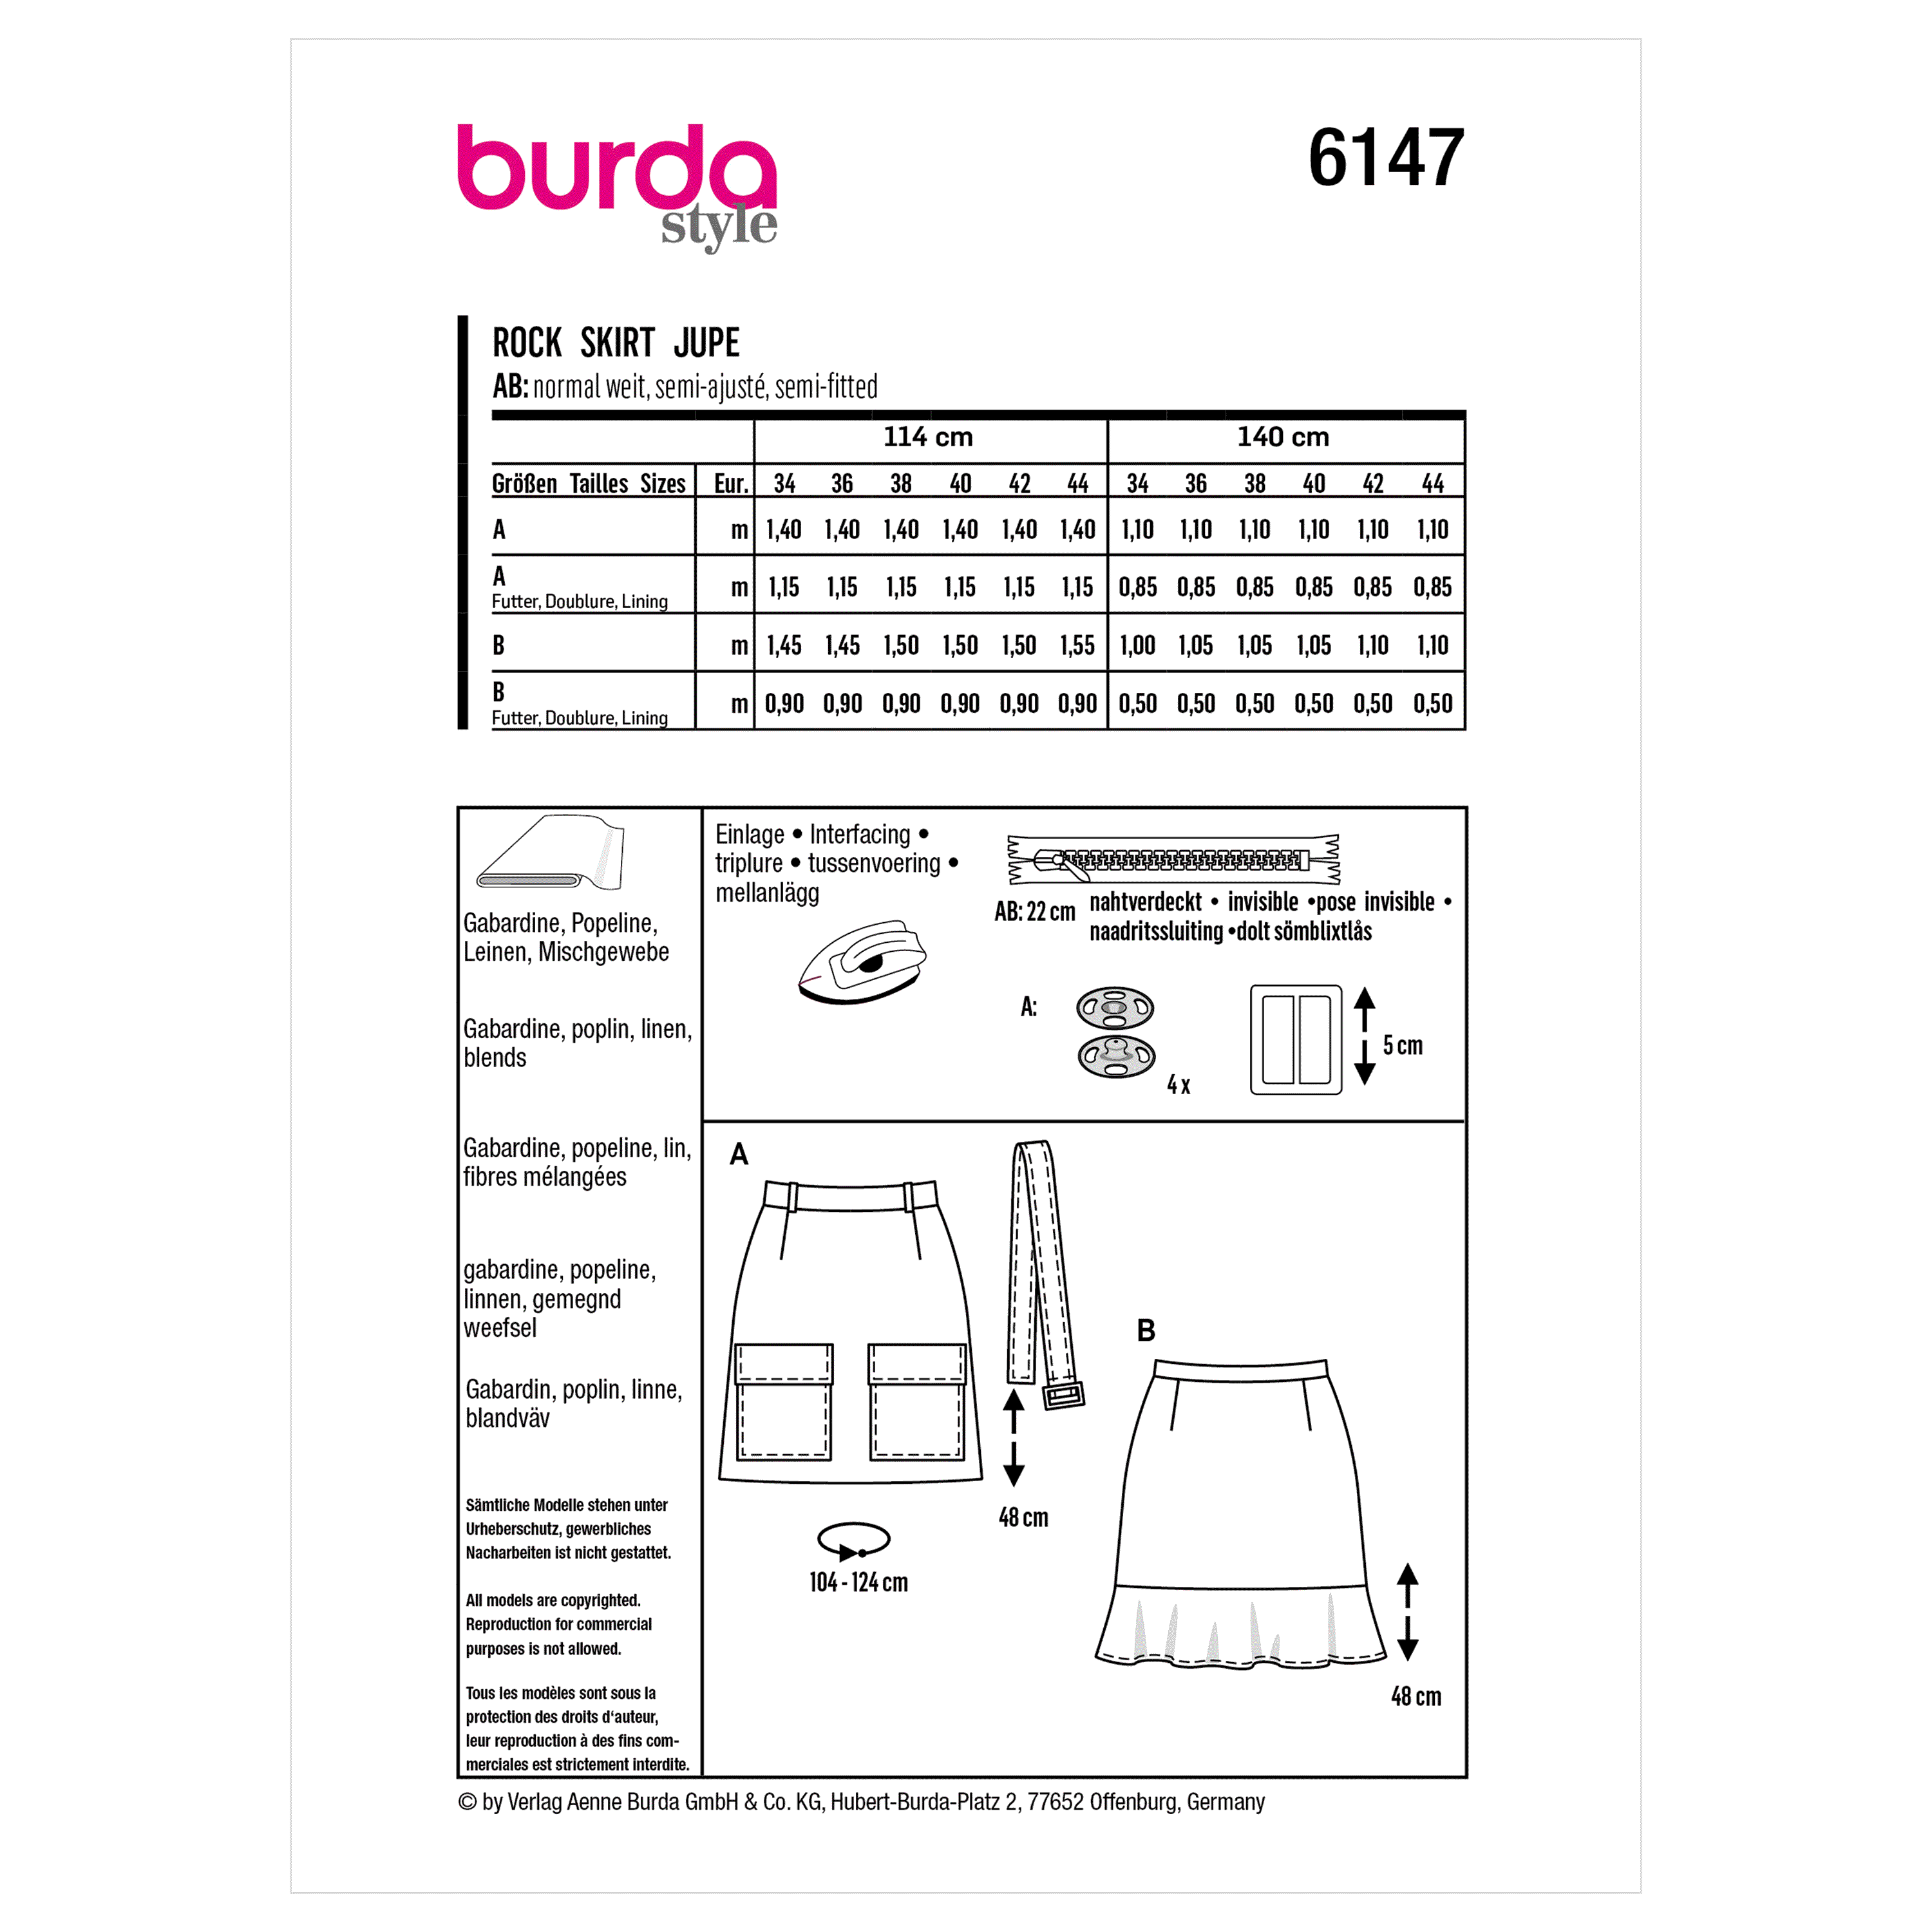 Burda Sewing Pattern 6147 Skirt from Jaycotts Sewing Supplies